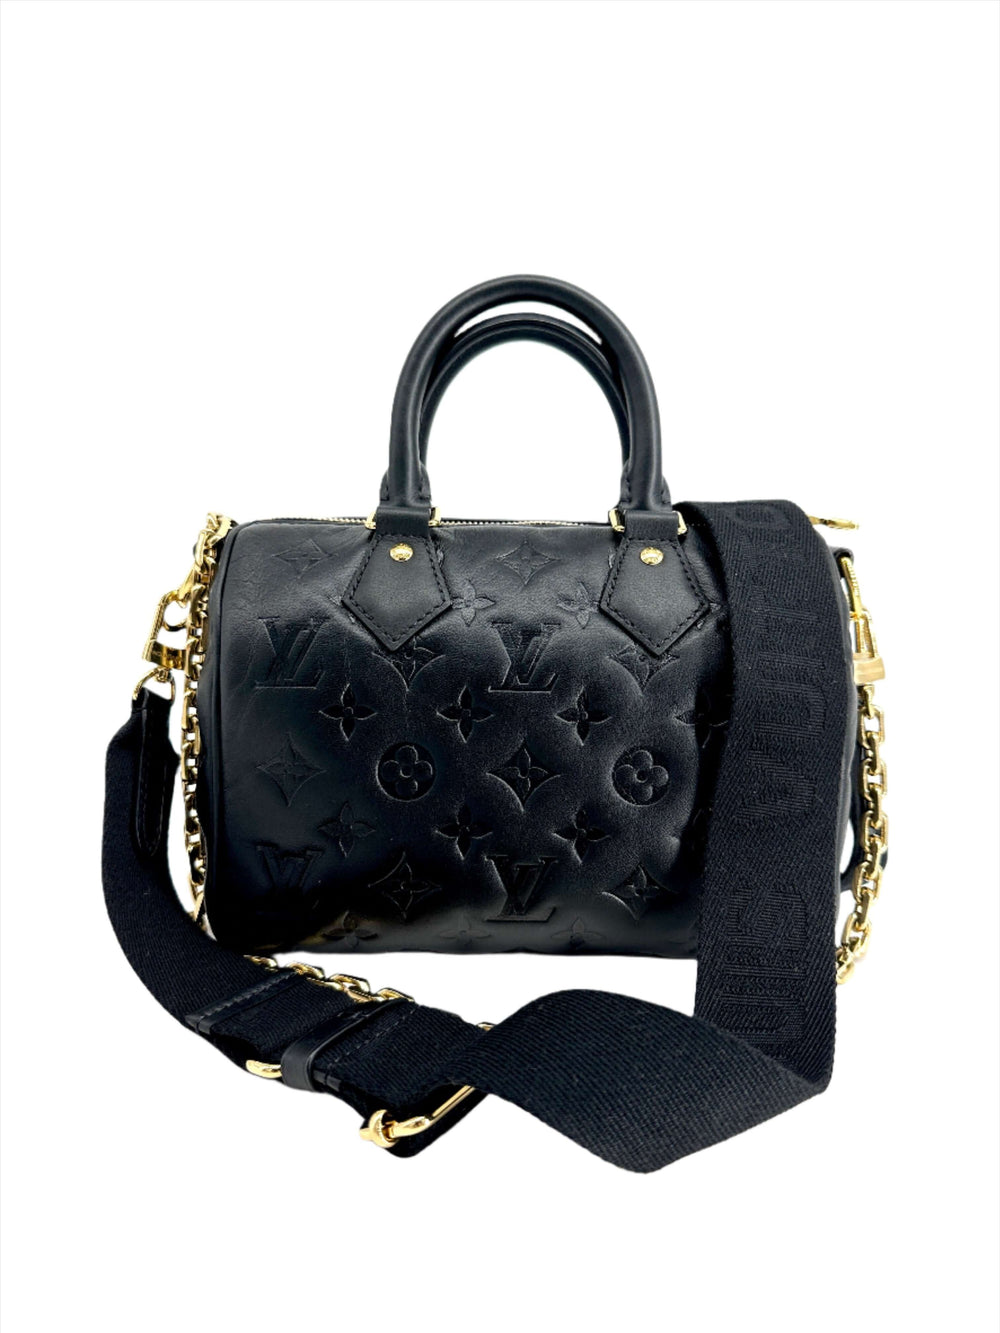 Louis Vuitton Lambskin Embossed Monogram Speedy 22 Bandouliere Black Handbag with Chain Strap